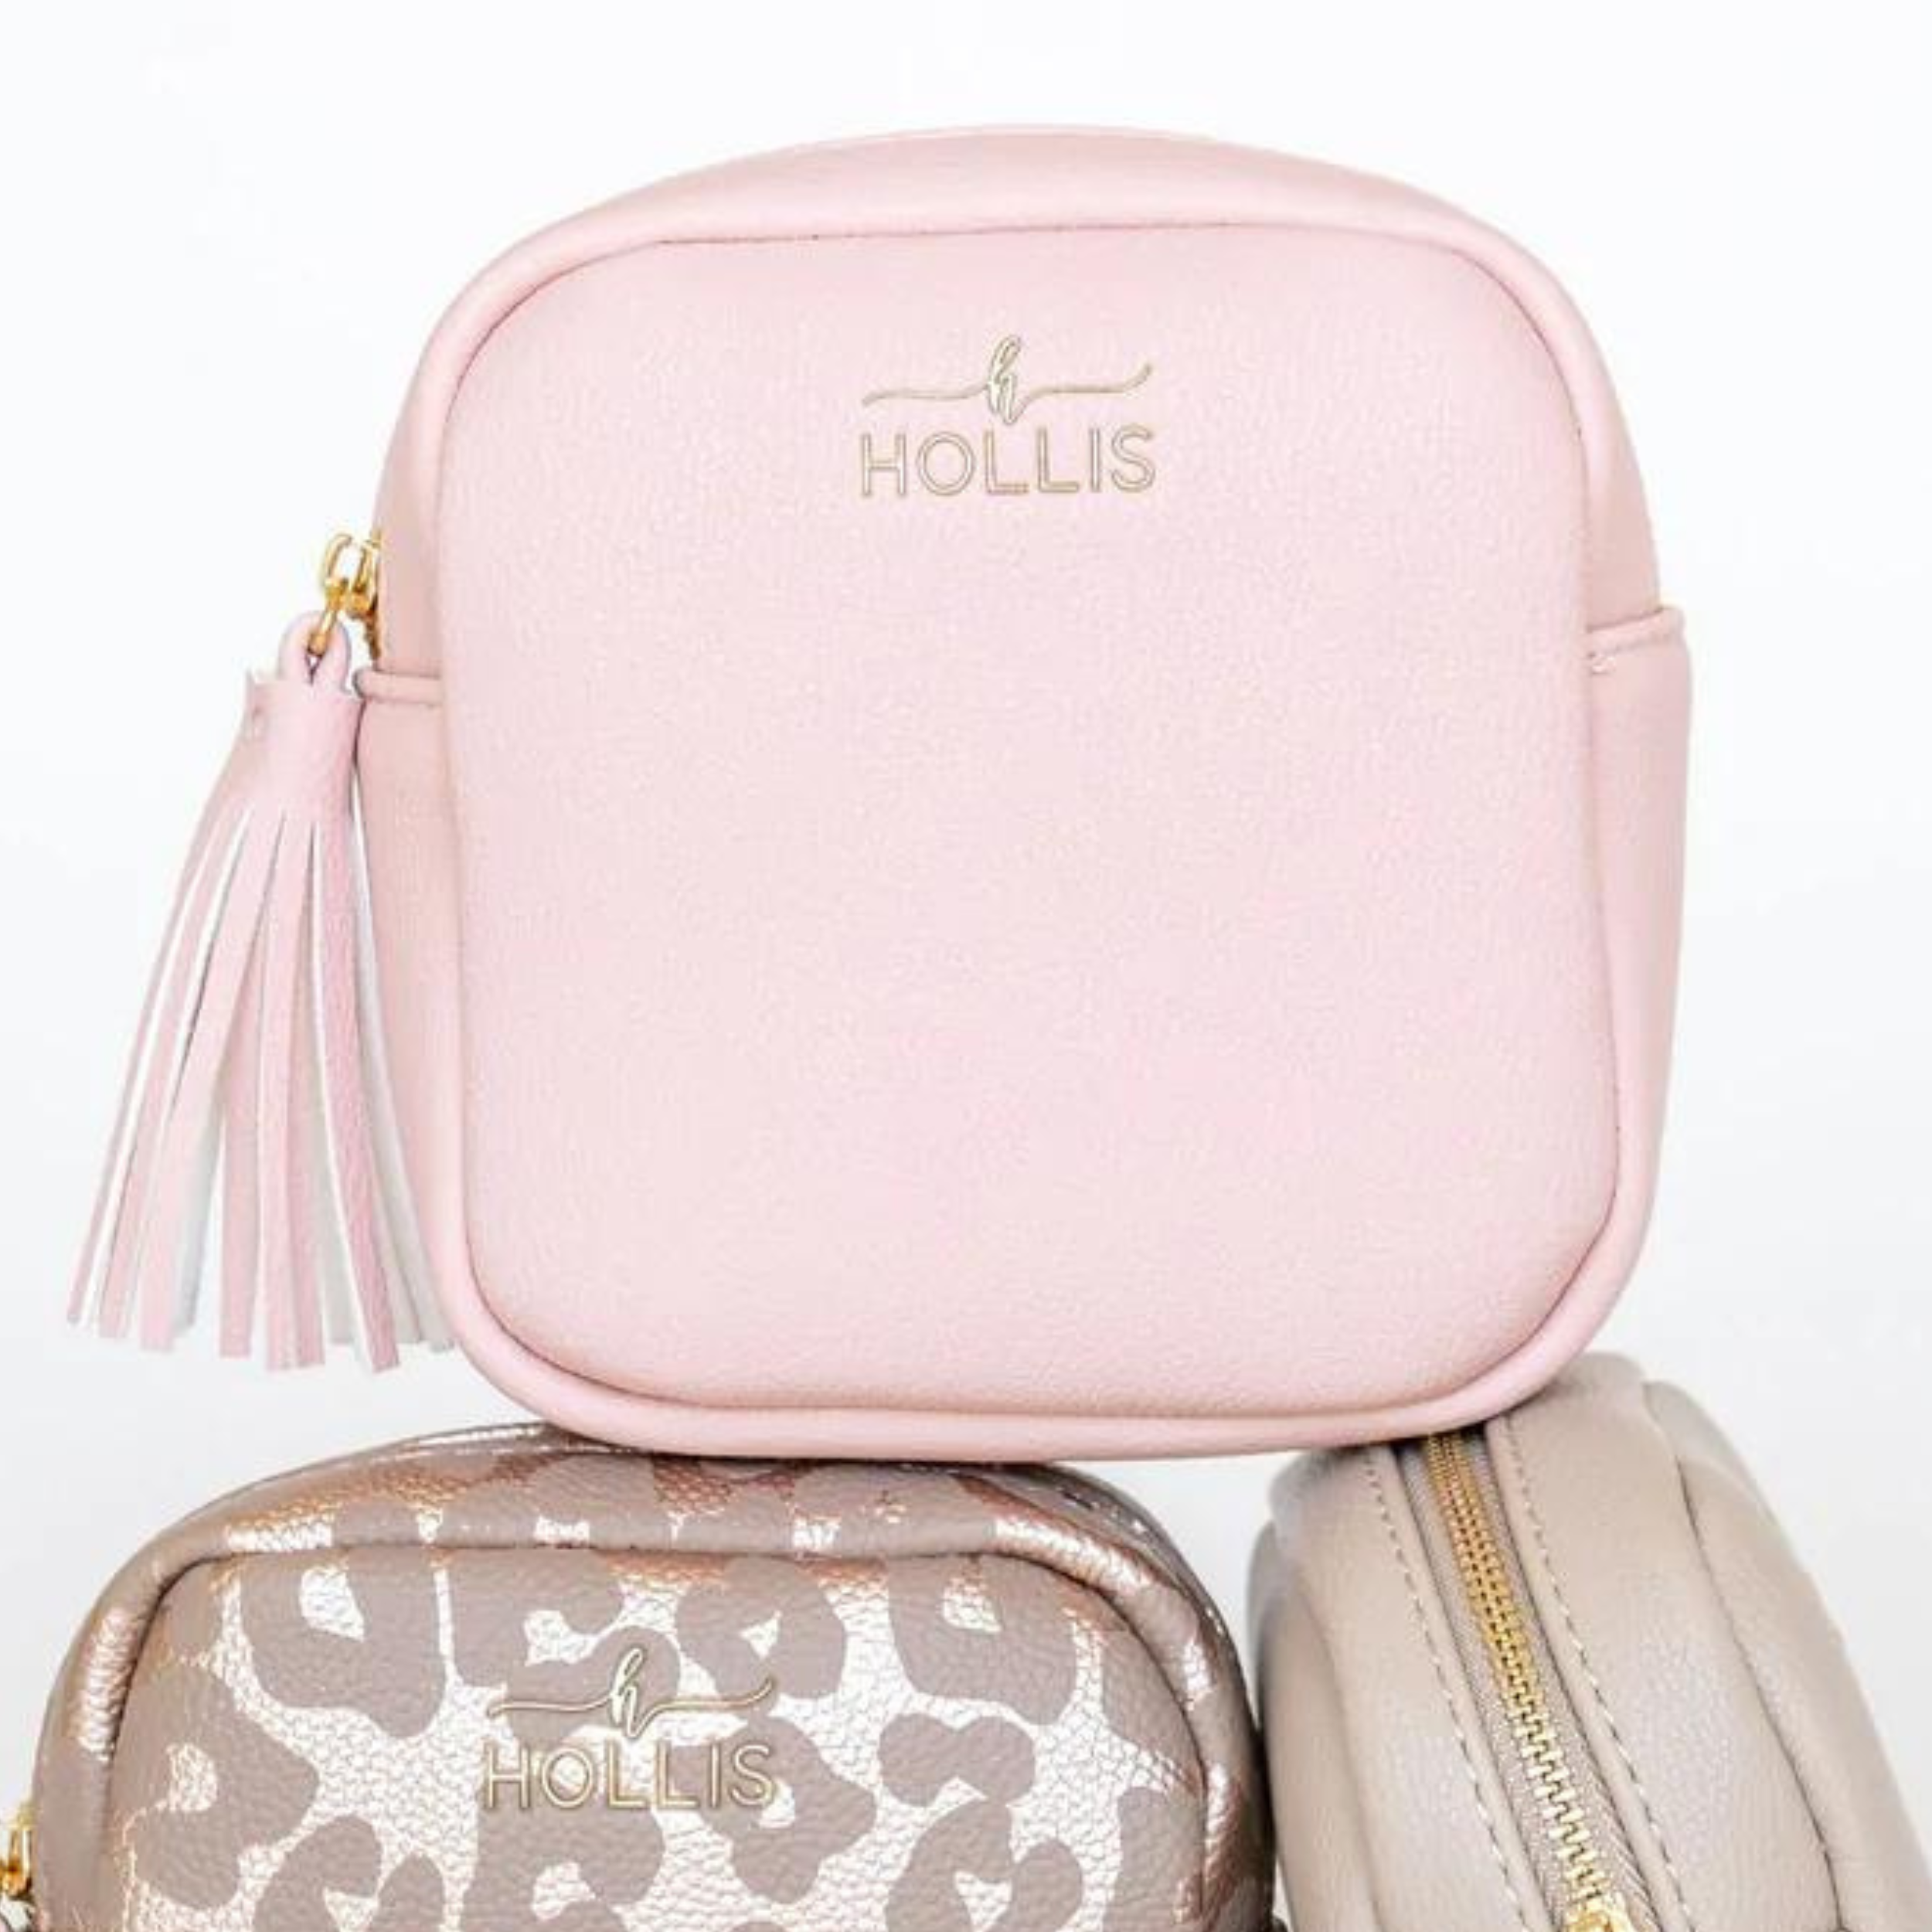 Hollis | Tech Organizer in Blush - Giddy Up Glamour Boutique